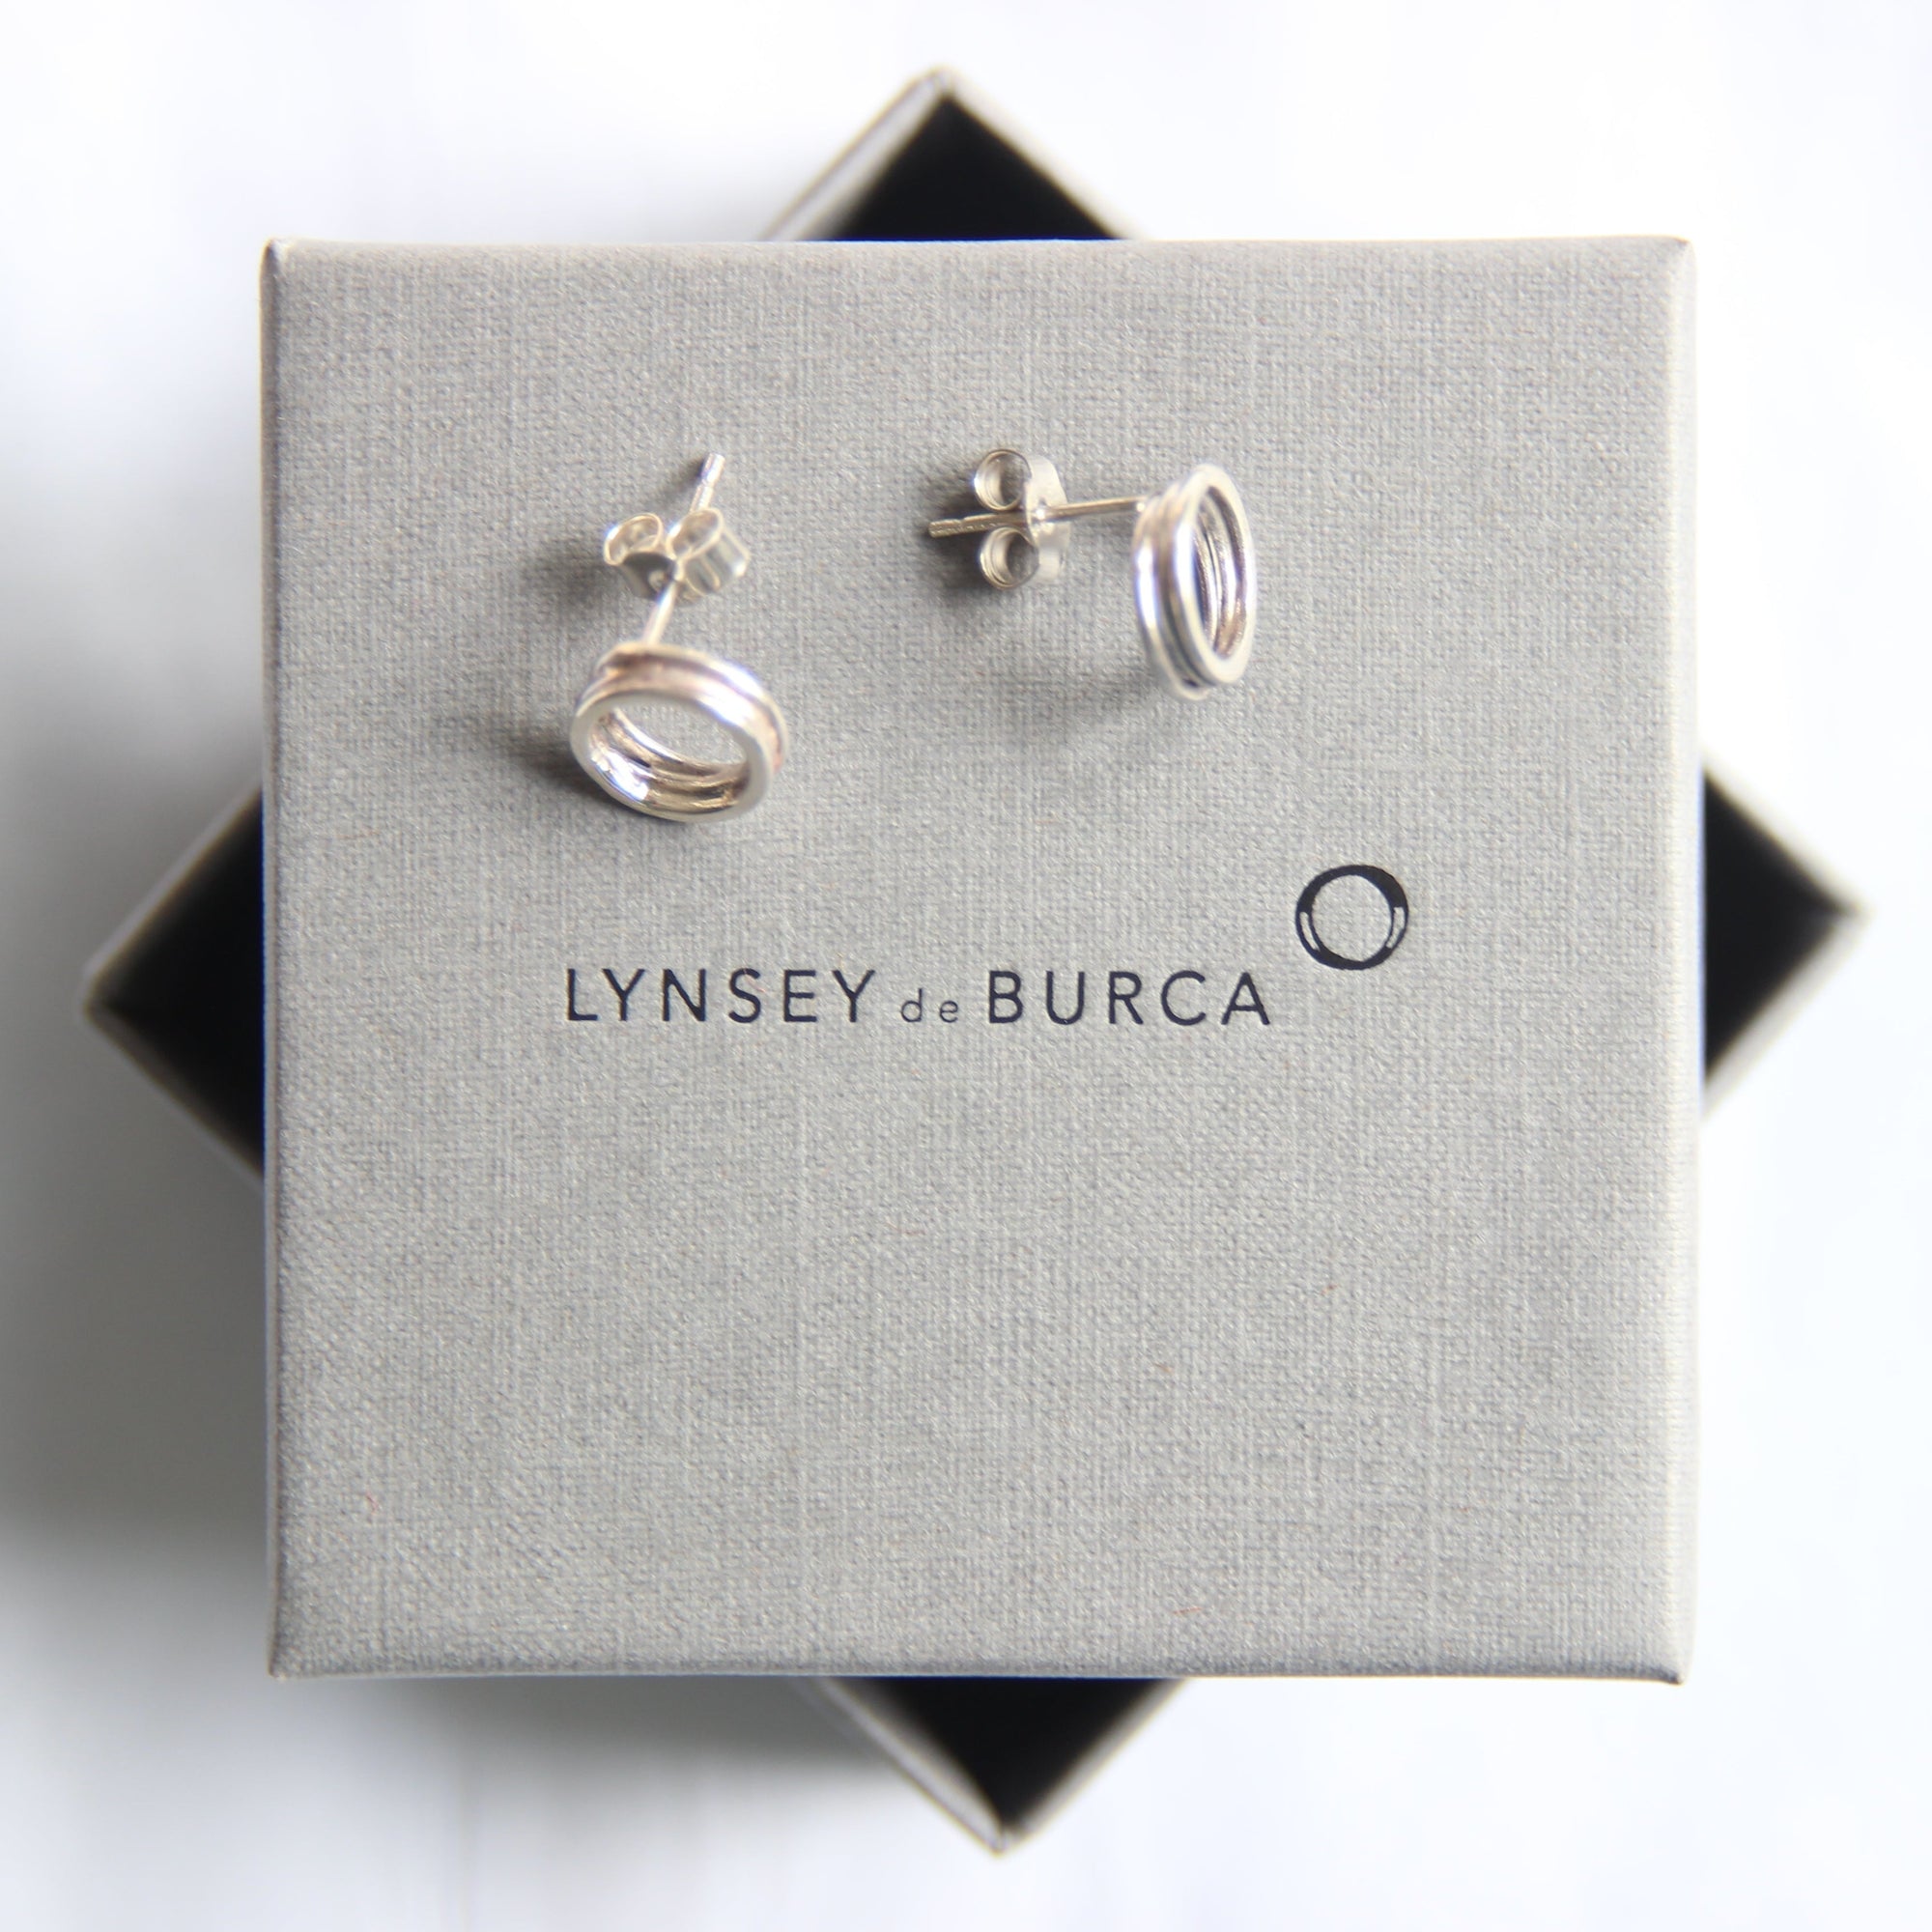 Doorus Stud Earrings, Lynsey de Burca